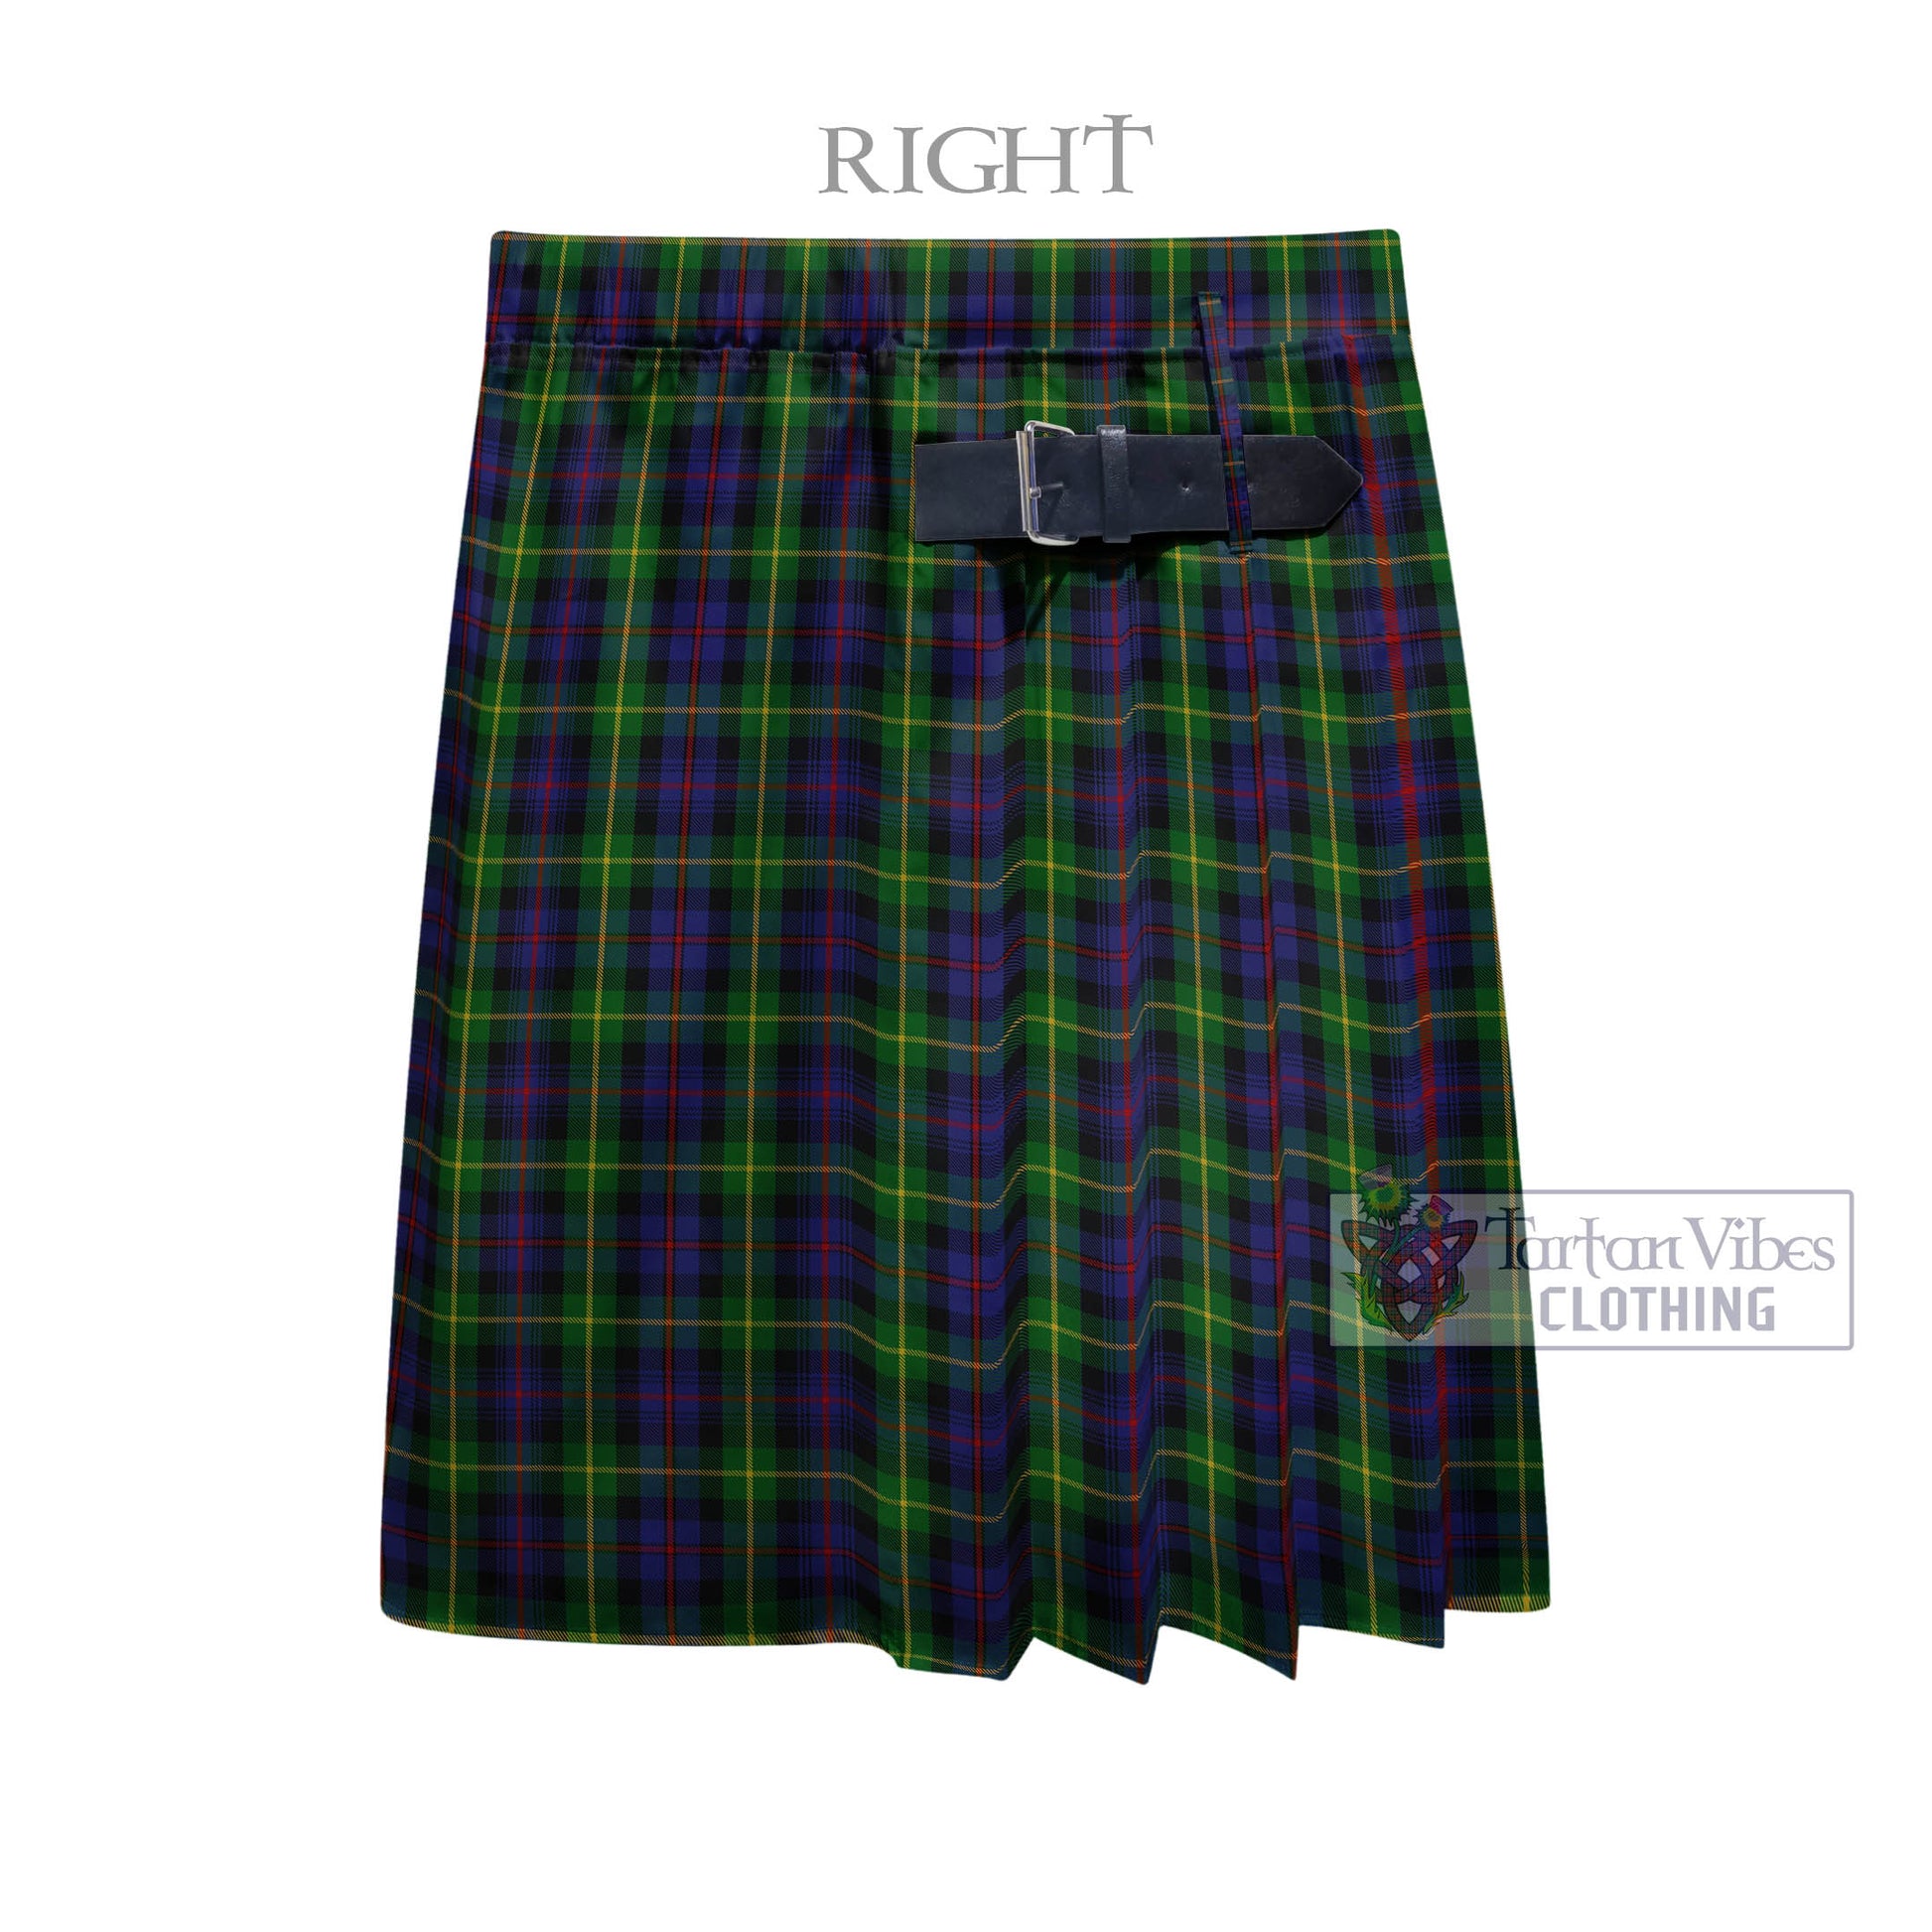 Tartan Vibes Clothing Farquharson Tartan Men's Pleated Skirt - Fashion Casual Retro Scottish Style